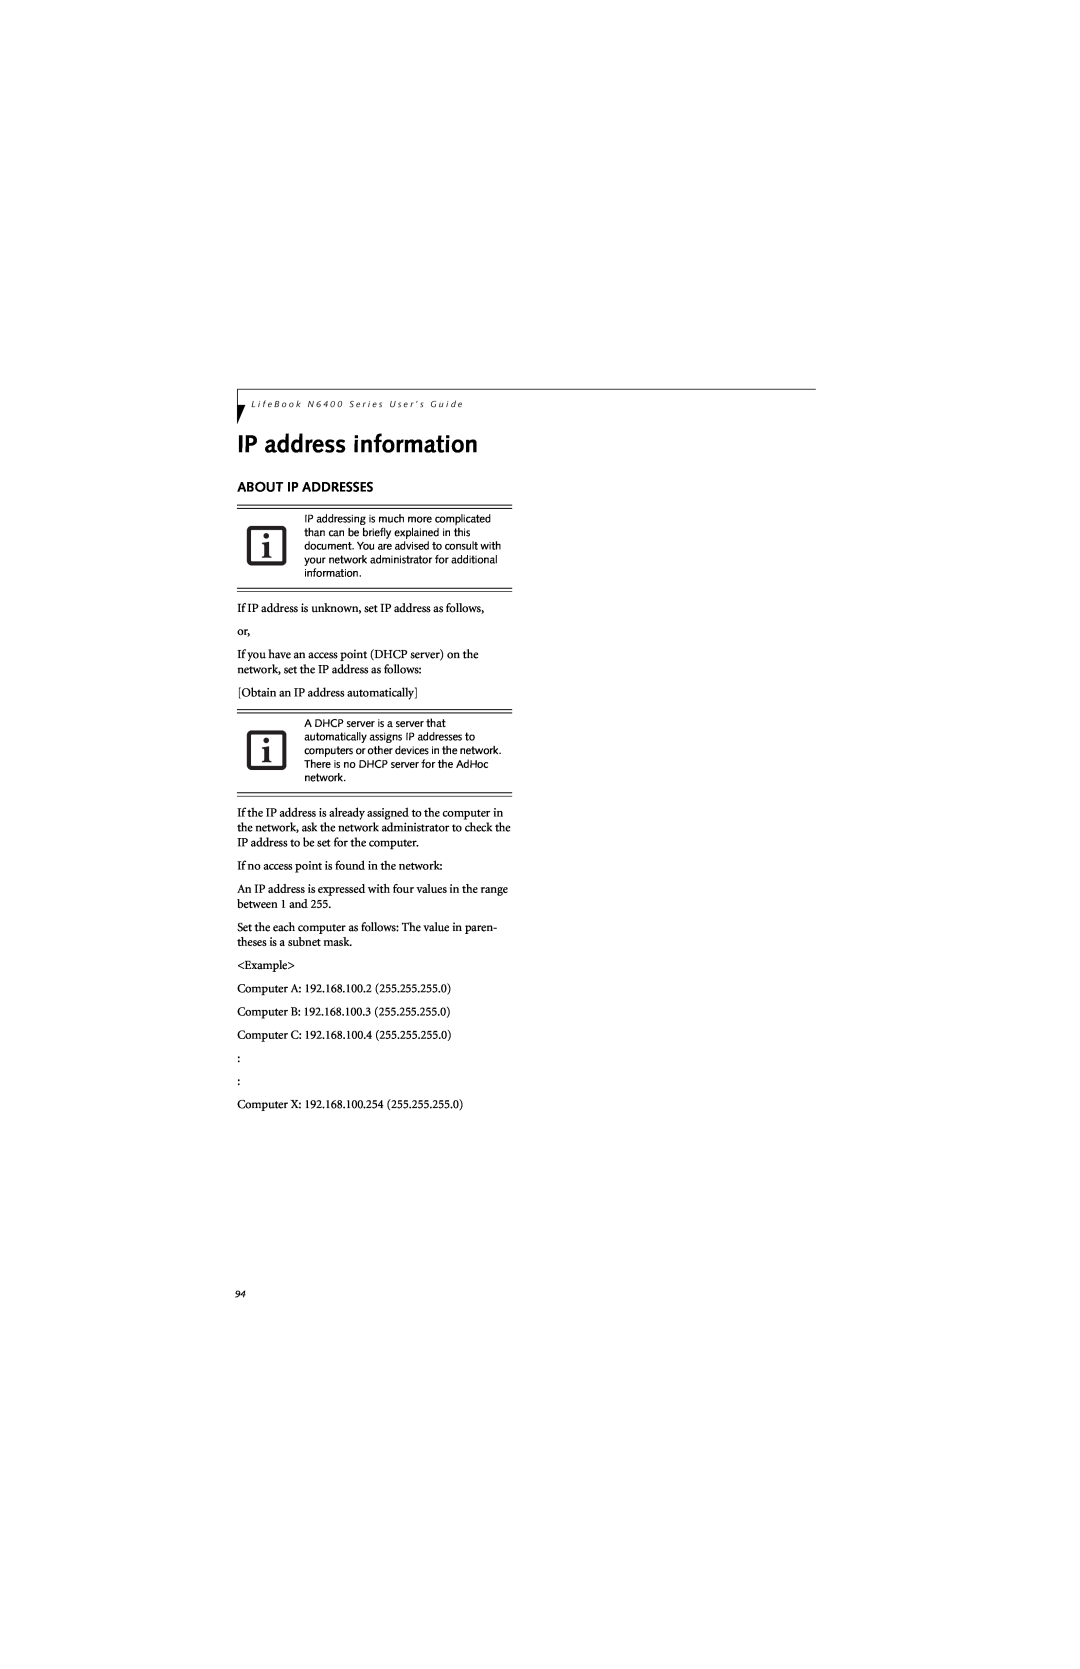 Fujitsu N6460 manual IP address information, About Ip Addresses 